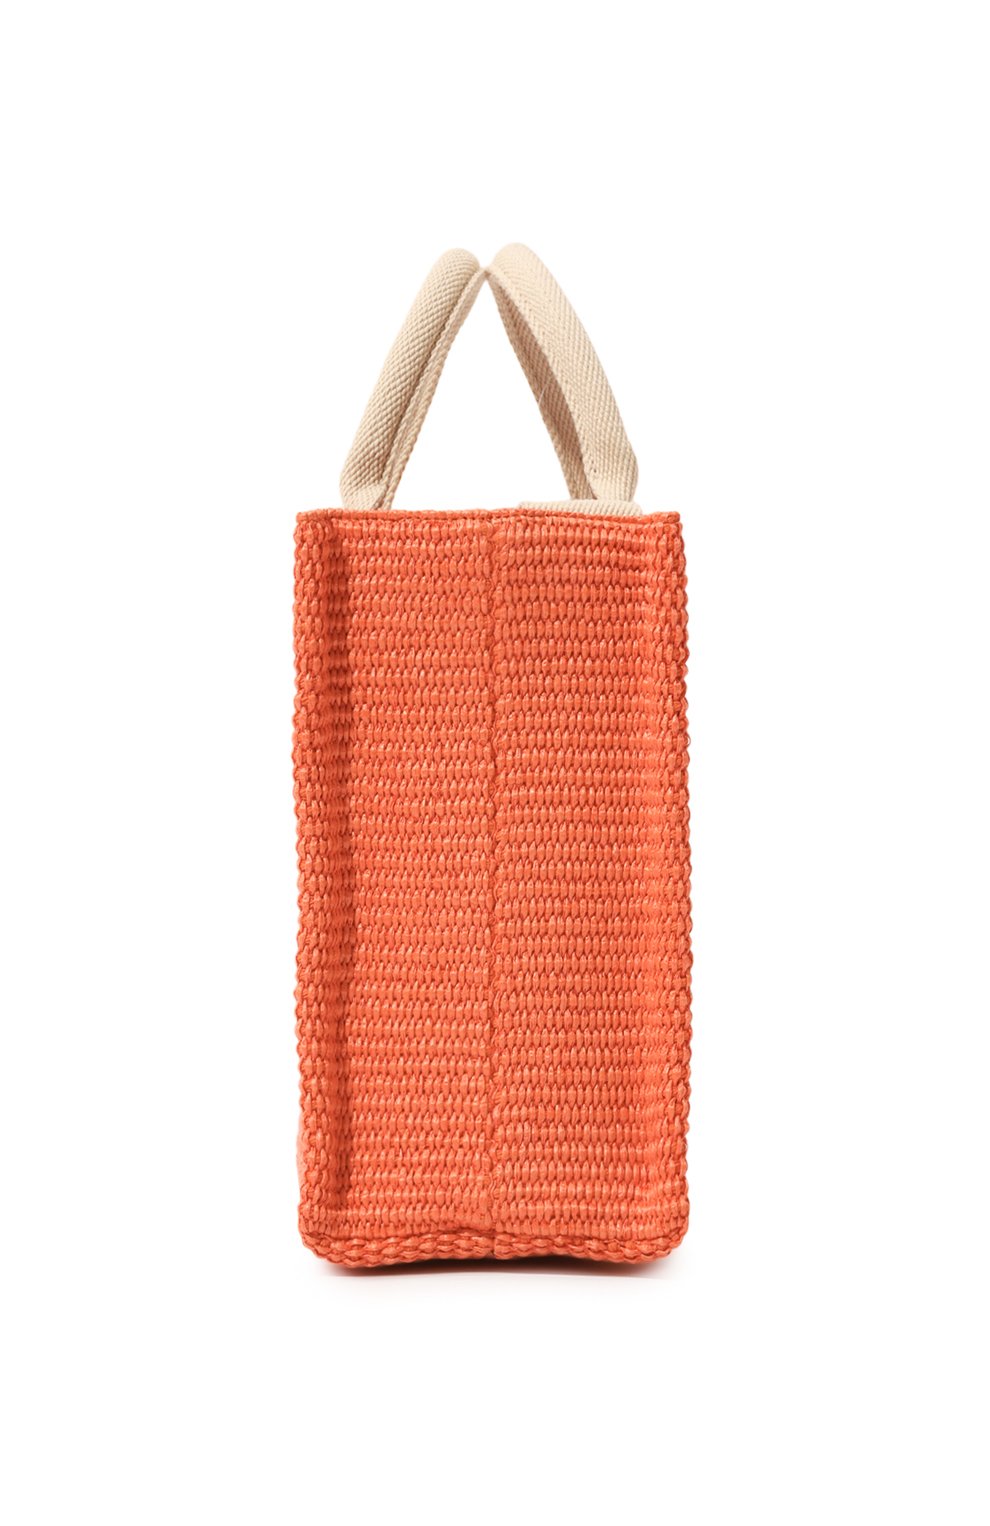 Женский сумка-тоут basket small MARNI оранжевого цвета, арт. SHMP0077U0/P3860 | Фот о 4 (Сумки-технические: Сумки-шопперы; Материал сплава: Проставлено; Материал: Текстиль; Драгоценные камни: Проставлено; Размер: small)